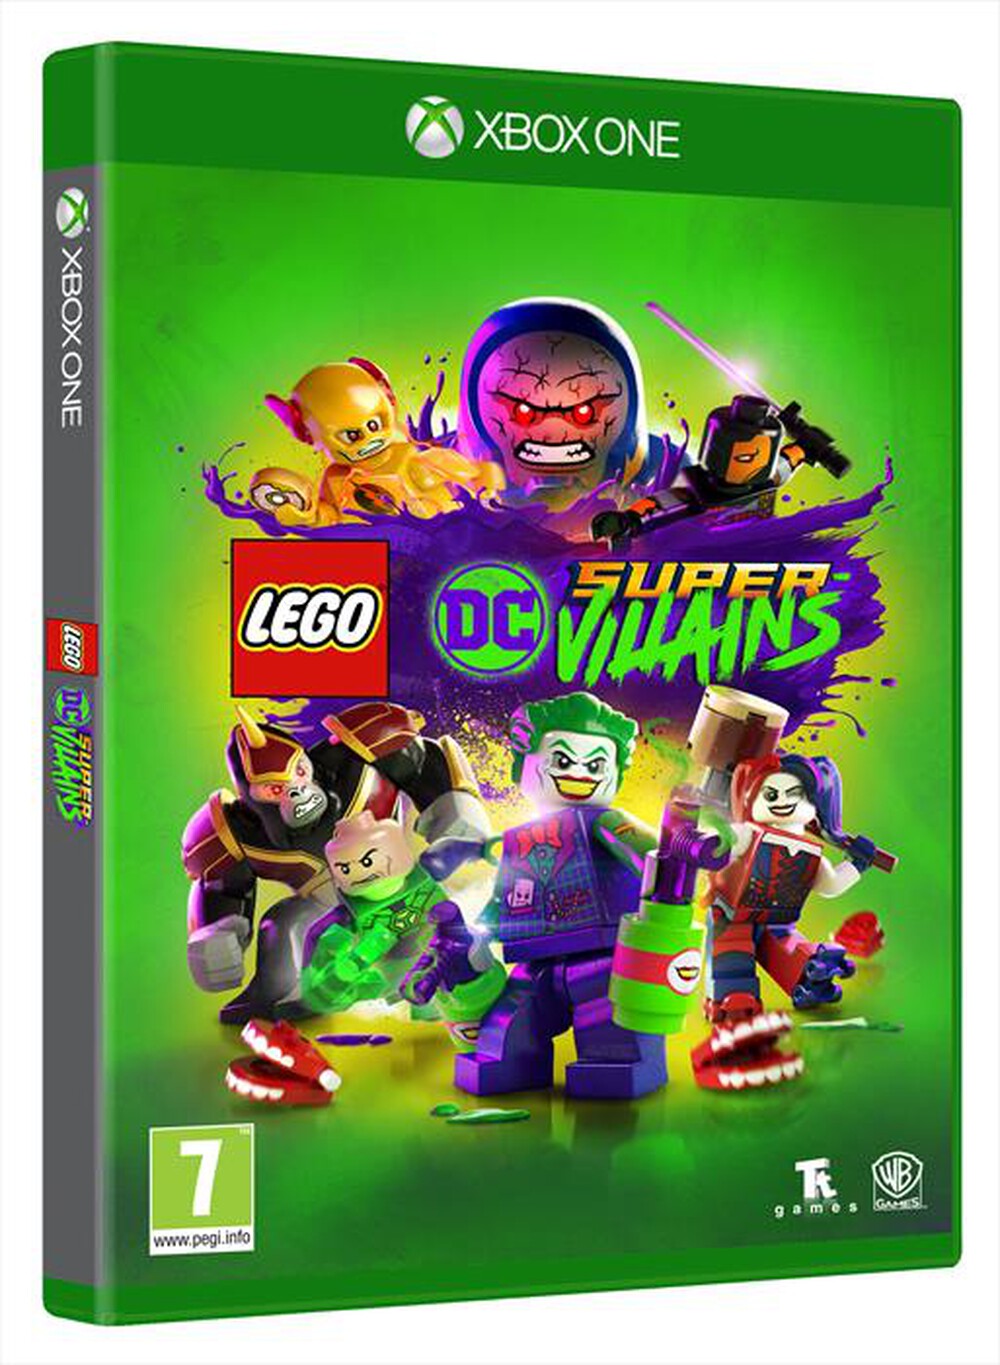 "WARNER GAMES - LEGO DC SUPER VILLAINS X1 - "